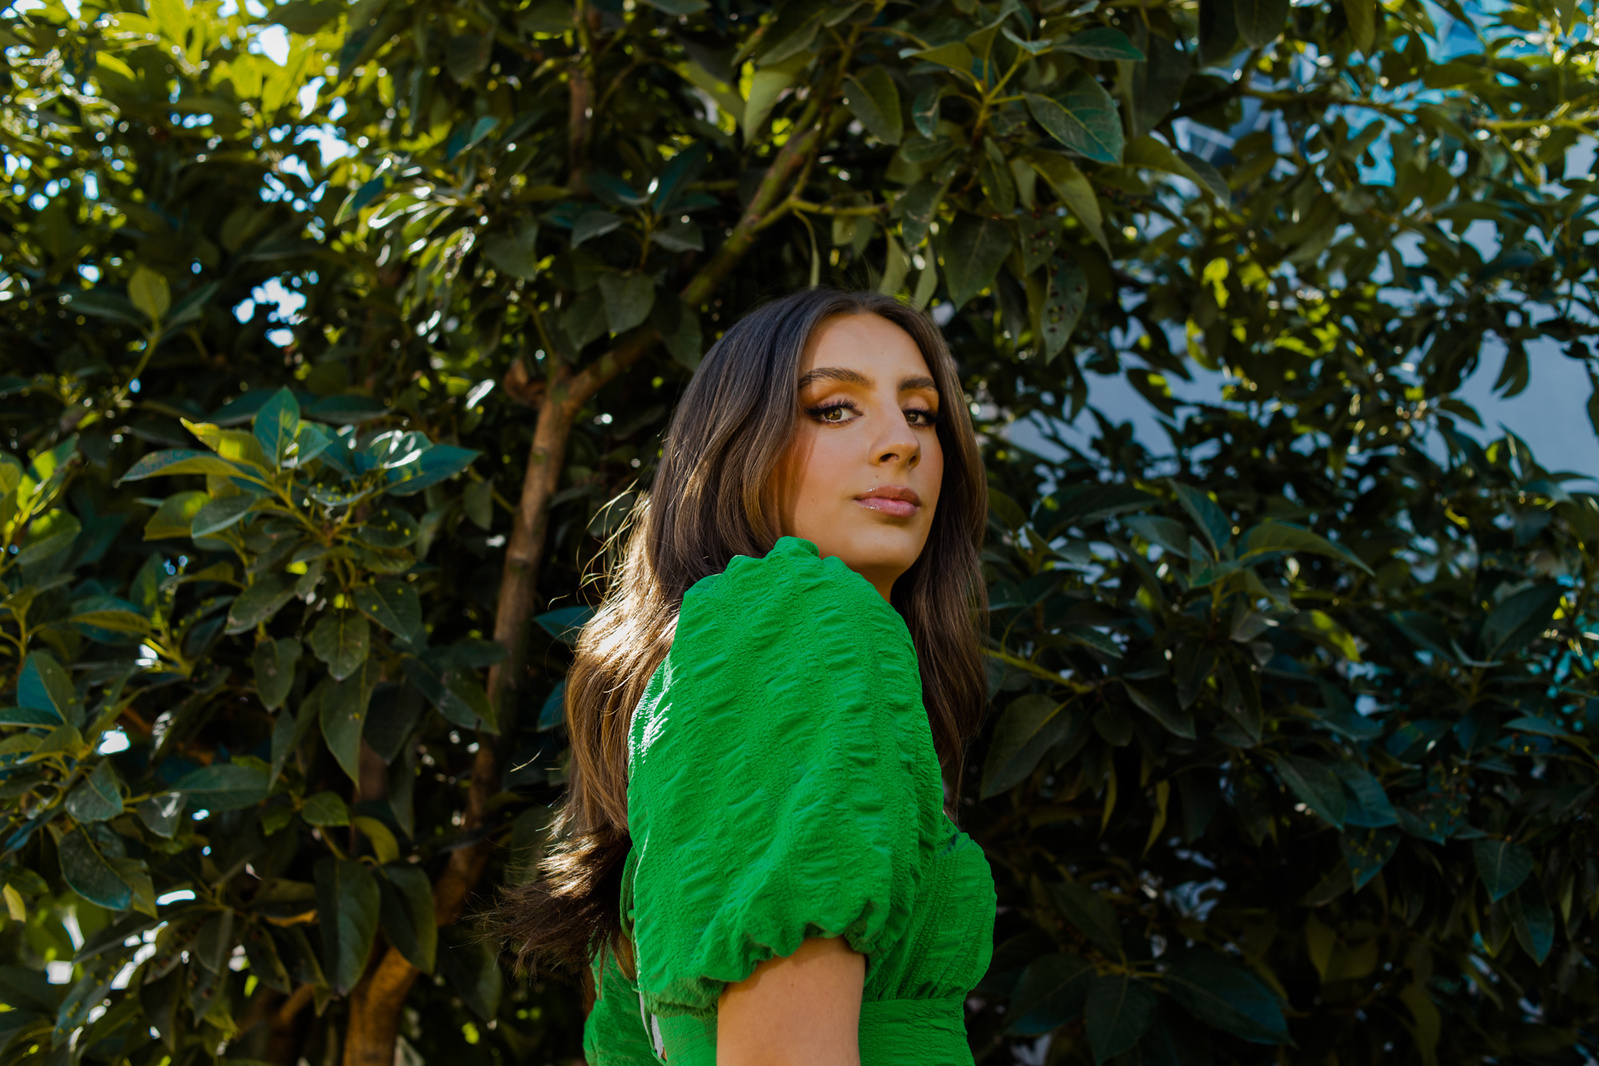 retrato editorial en exterior con modelo en vestido vaporoso verde, maquillaje profesional, a la sombra de un árbol, puebla, méxico